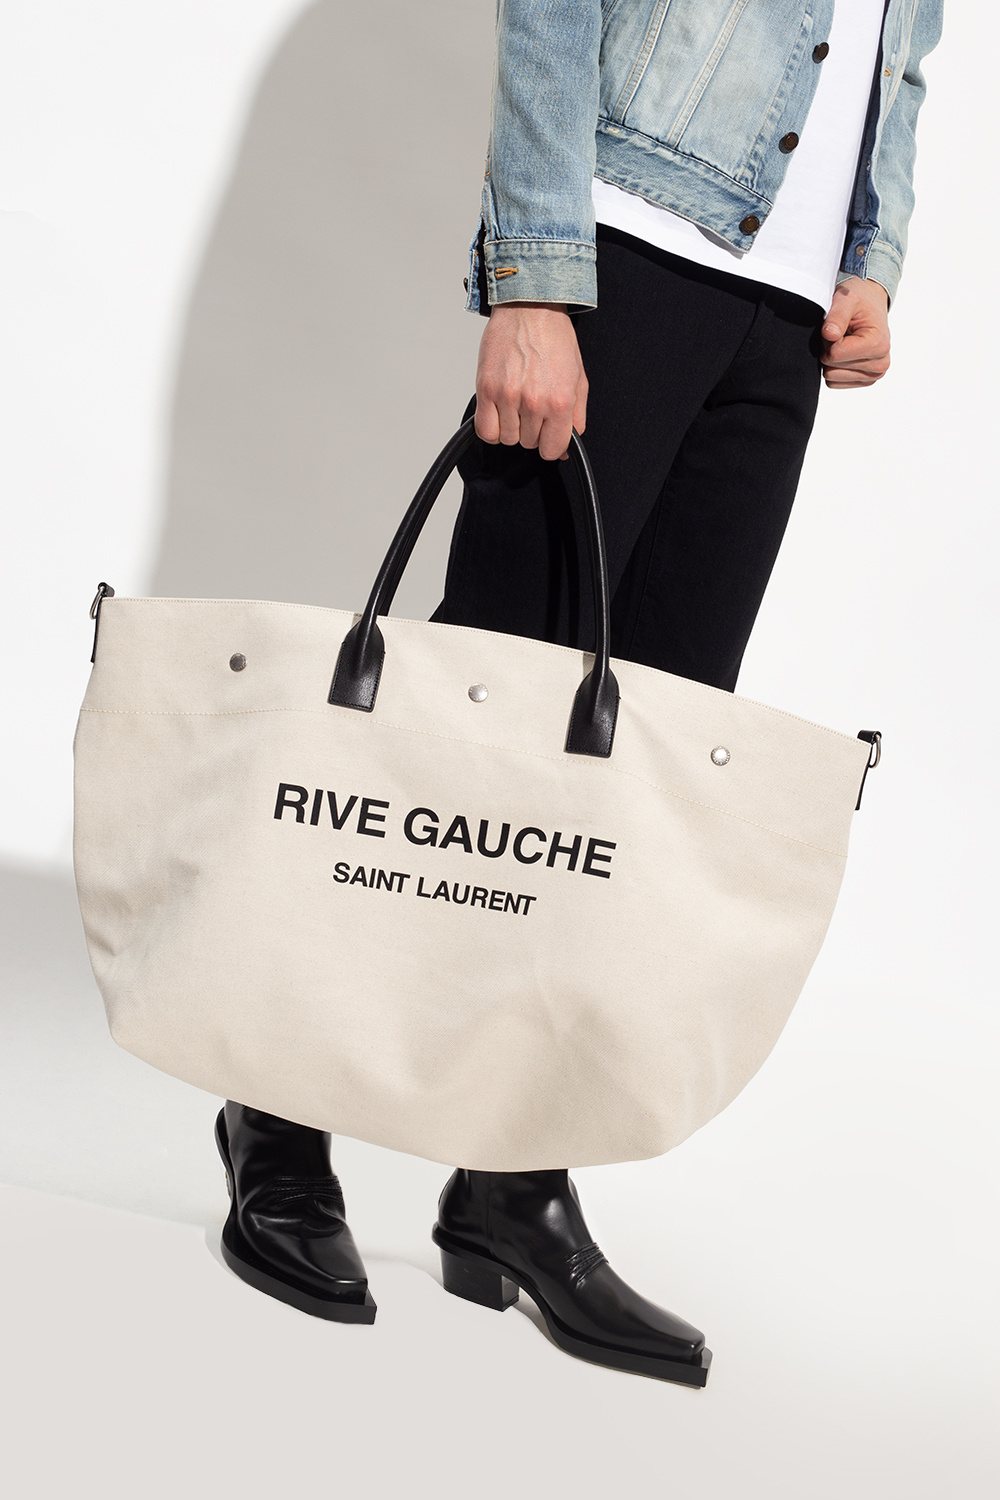 Men's Rive Gauche Bag, Saint Laurent